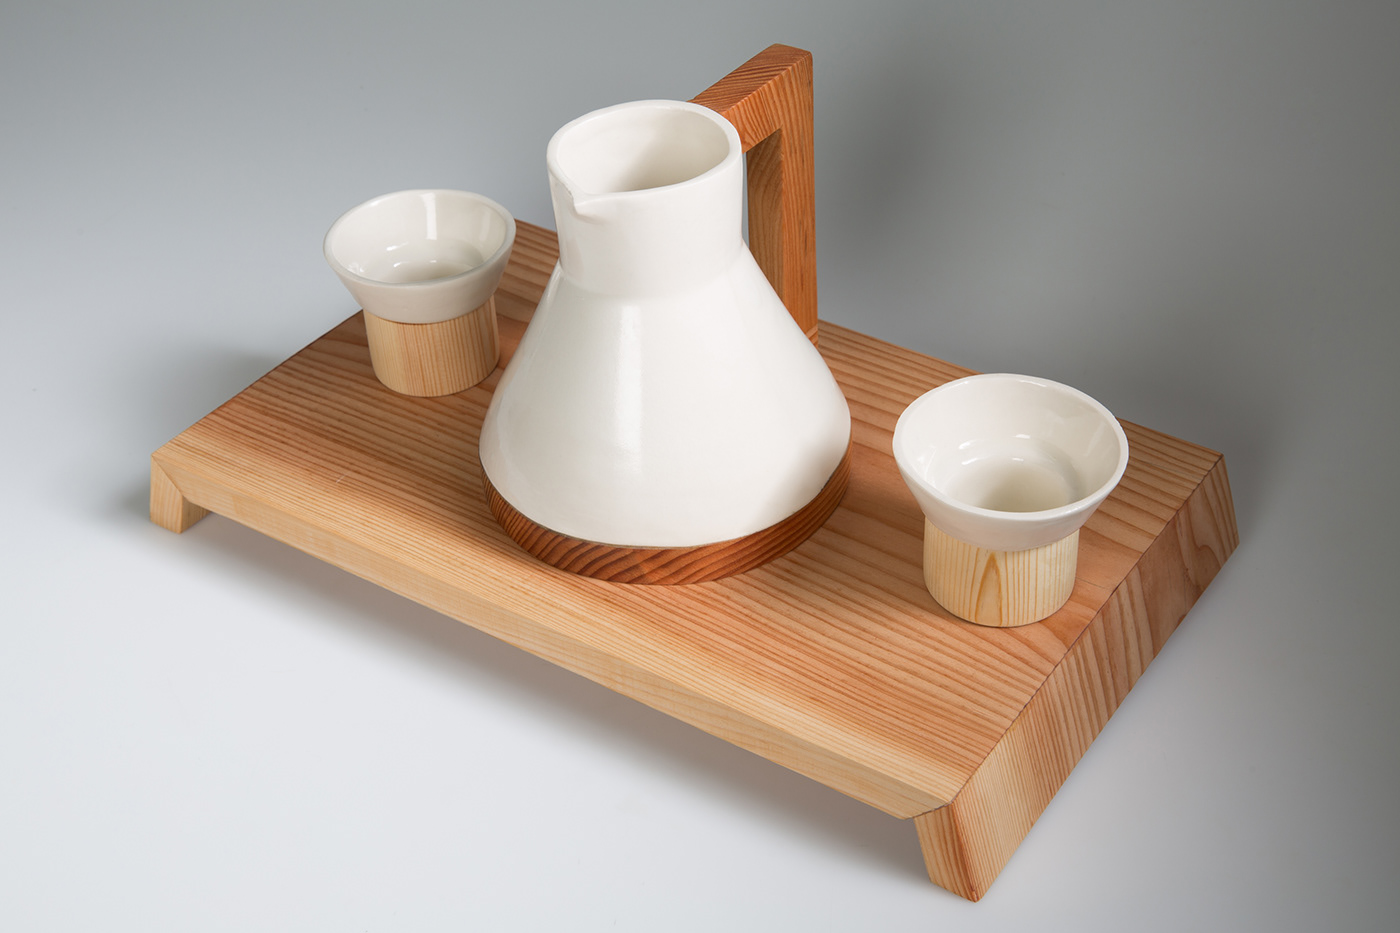 ceramics  3D product industrial design craft porcelain wood tea set teapot teacup handmade oriental minimal